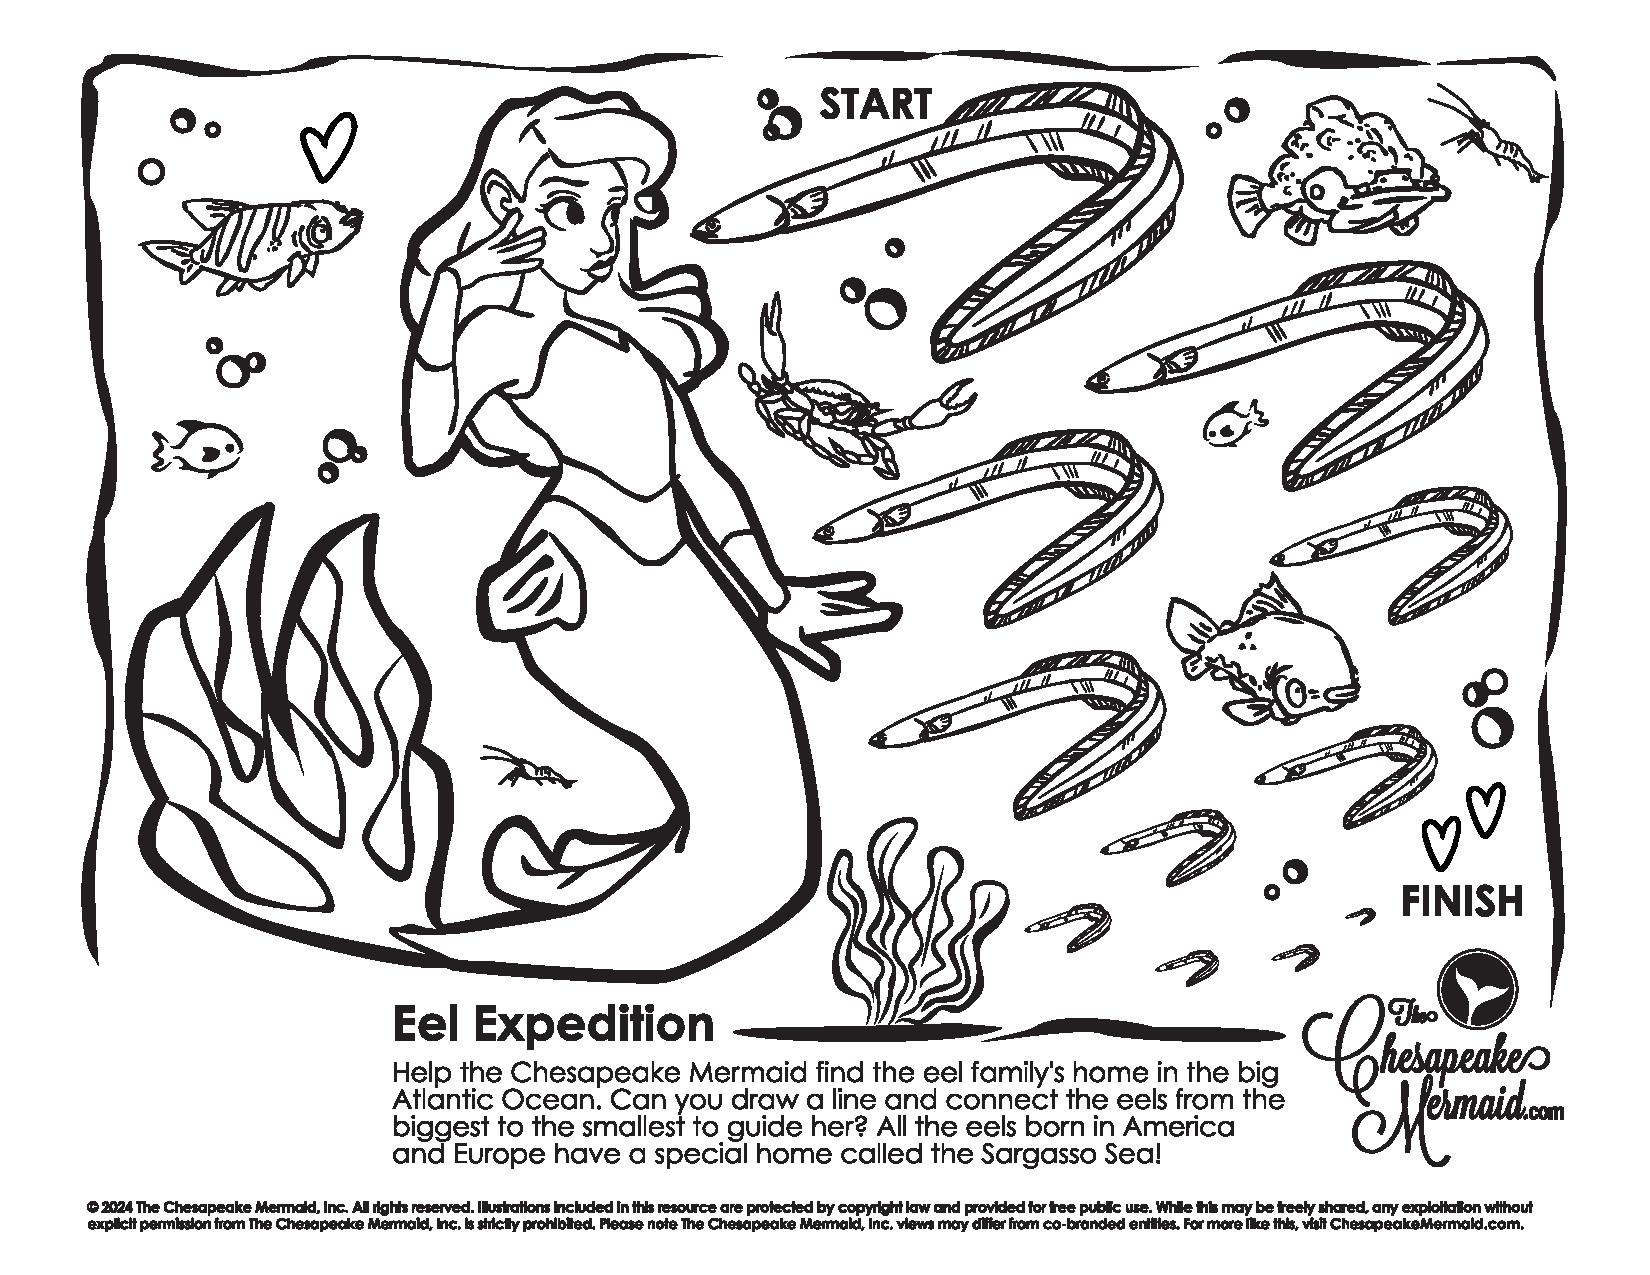 Eel Expedition!